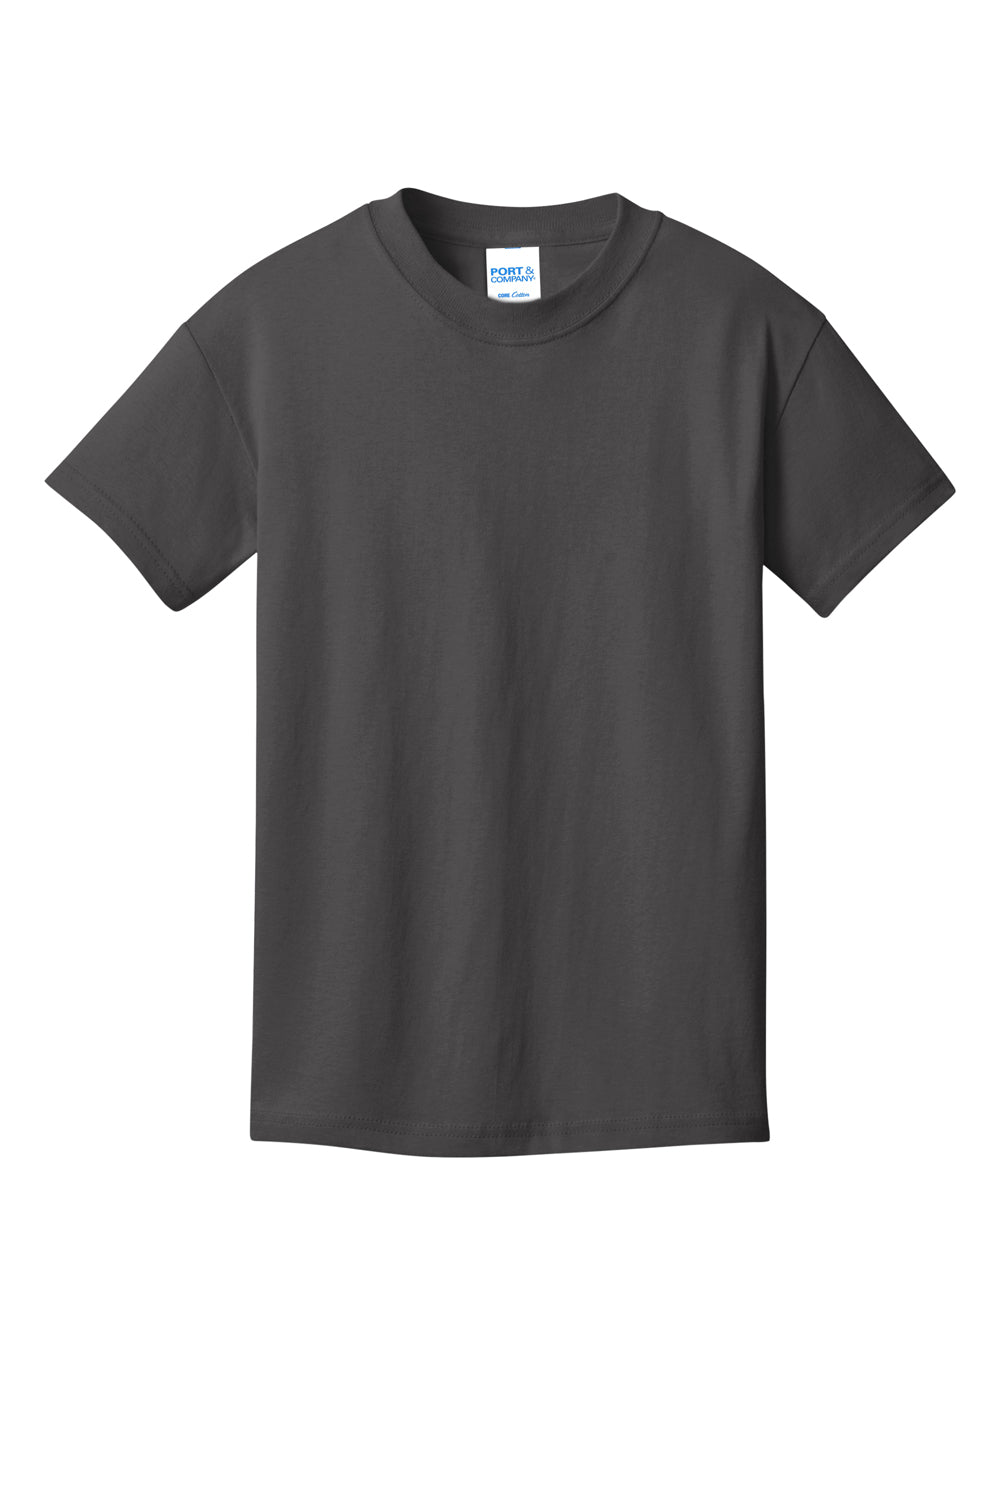 Port & Company PC54YDTG Core Cotton DTG Short Sleeve Crewneck T-Shirt Charcoal Grey Flat Front